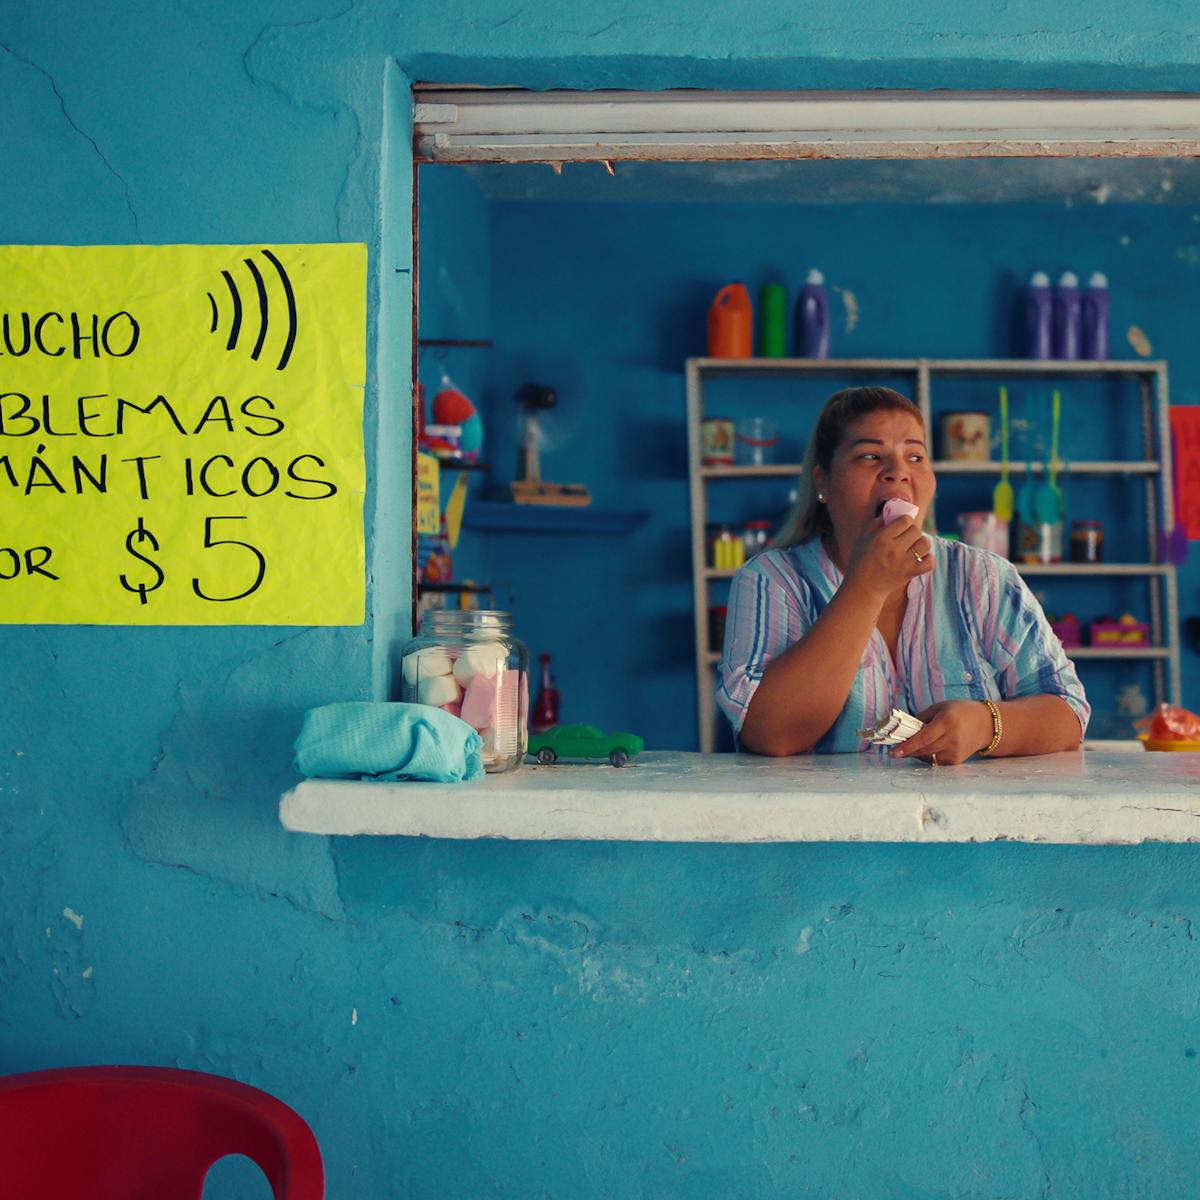 Los (casi) Idolos de Bahia Colorada character eats an ice cream in a blue cafe service window.